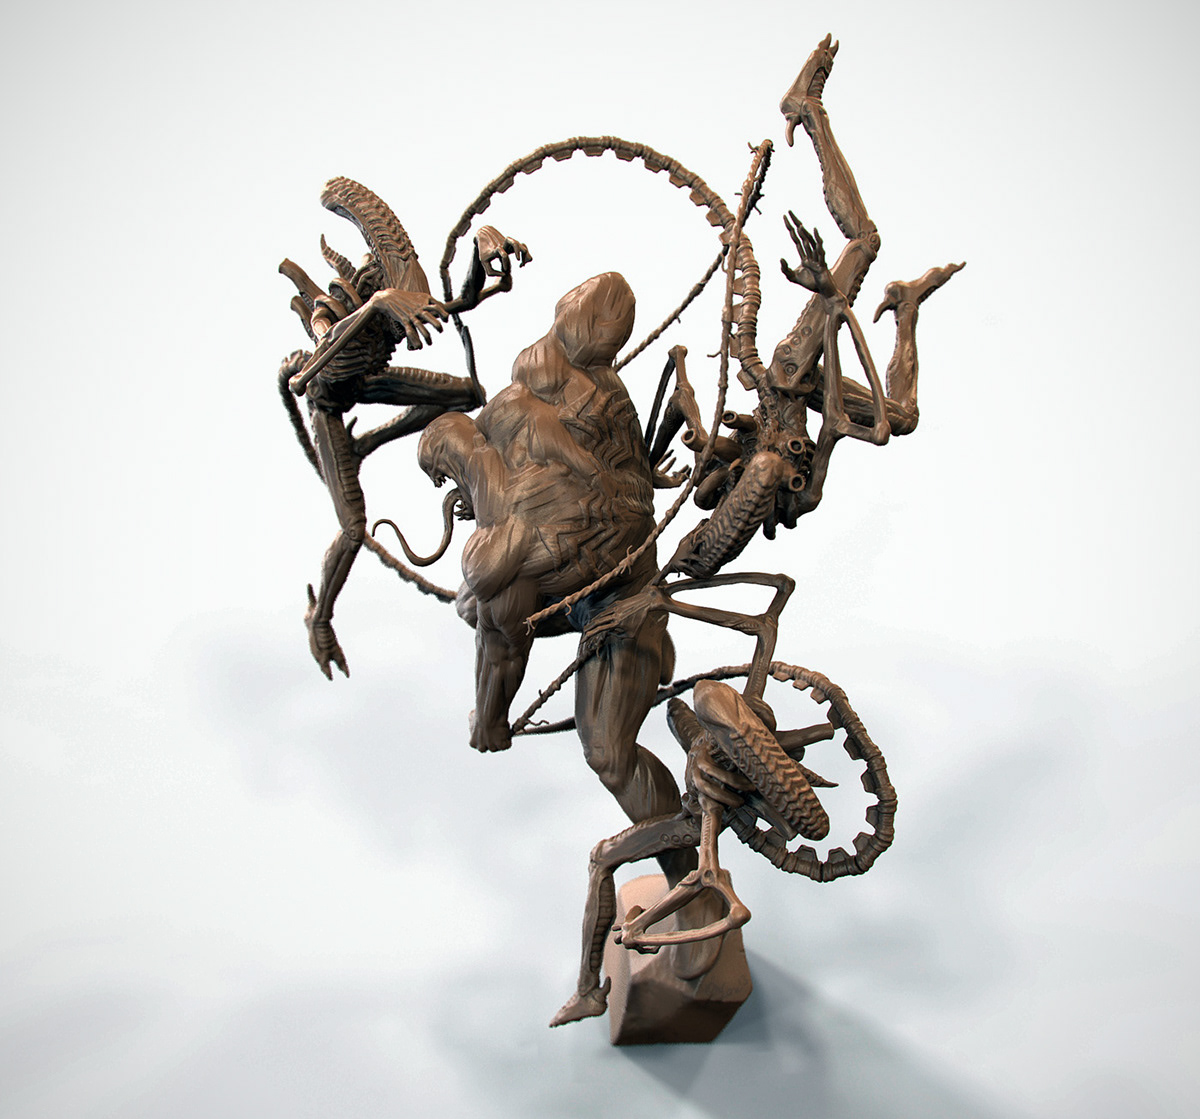 venom alien aliens versus digital sculpt